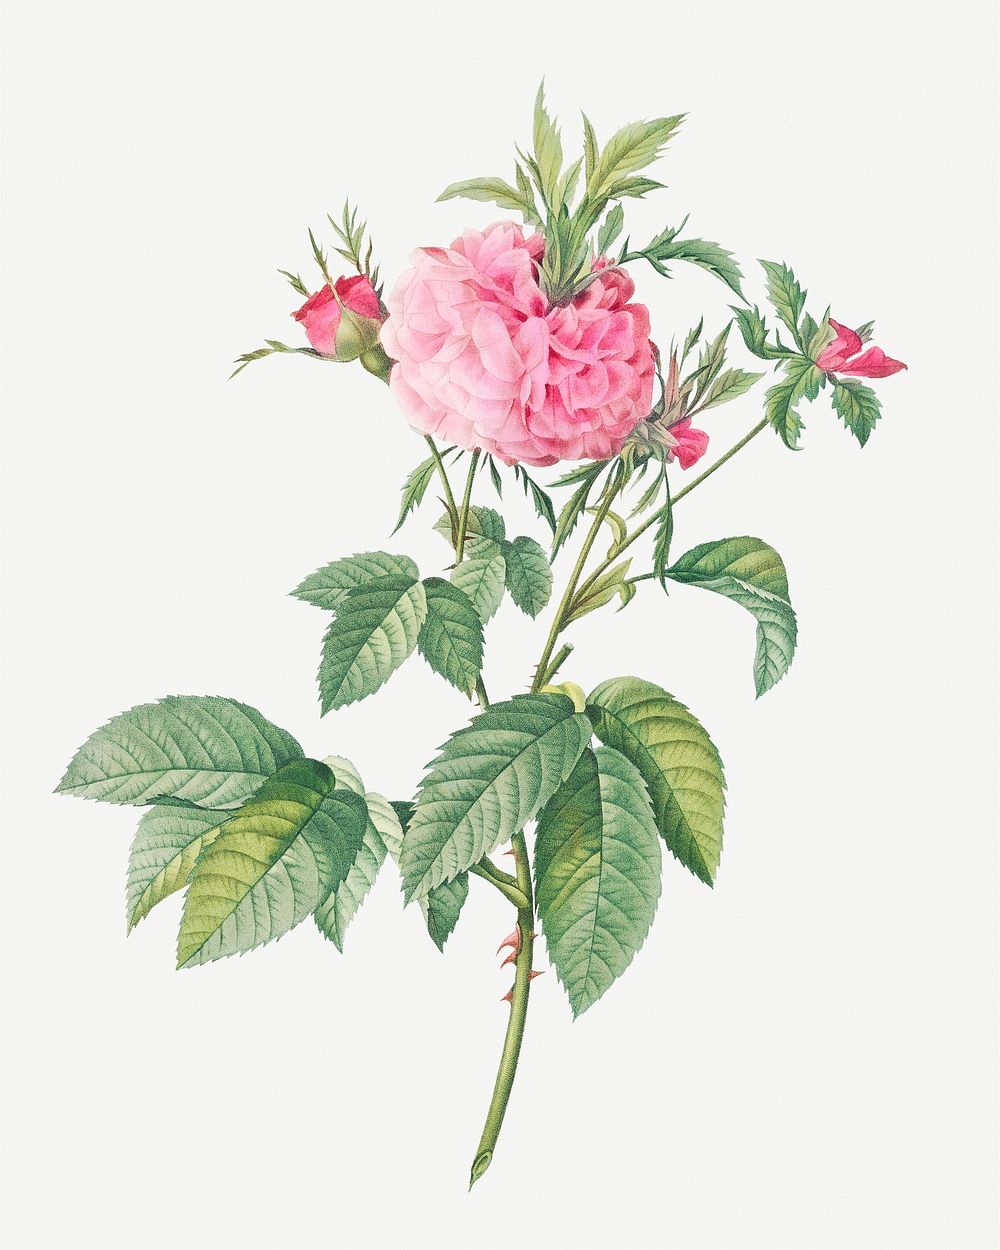 Vintage blooming Agatha rose illustration